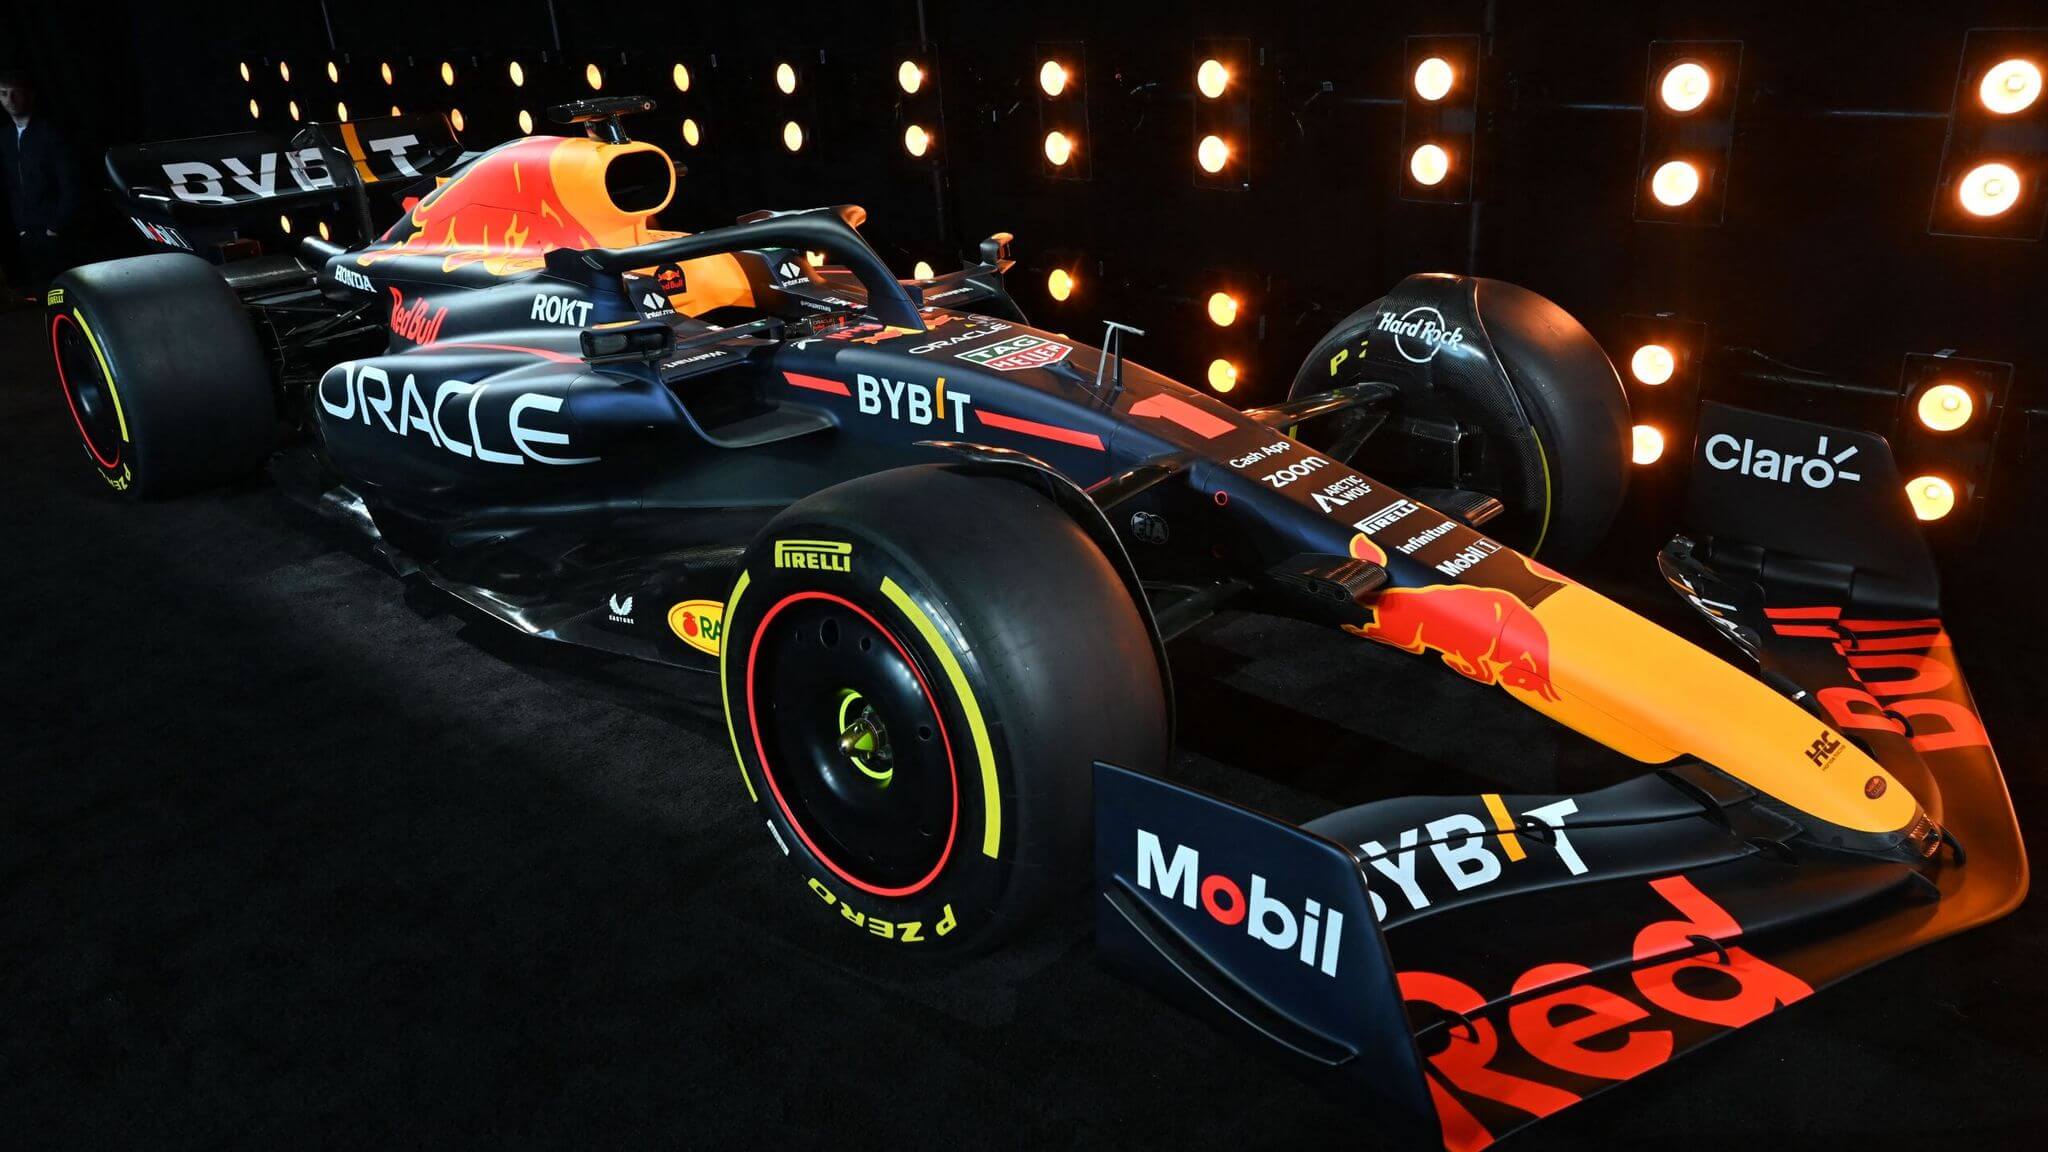 Реклама криптовалют в Формуле 1 в 2023 году. Реклама Bybit от Red Bull в Формуле 1. Фото.